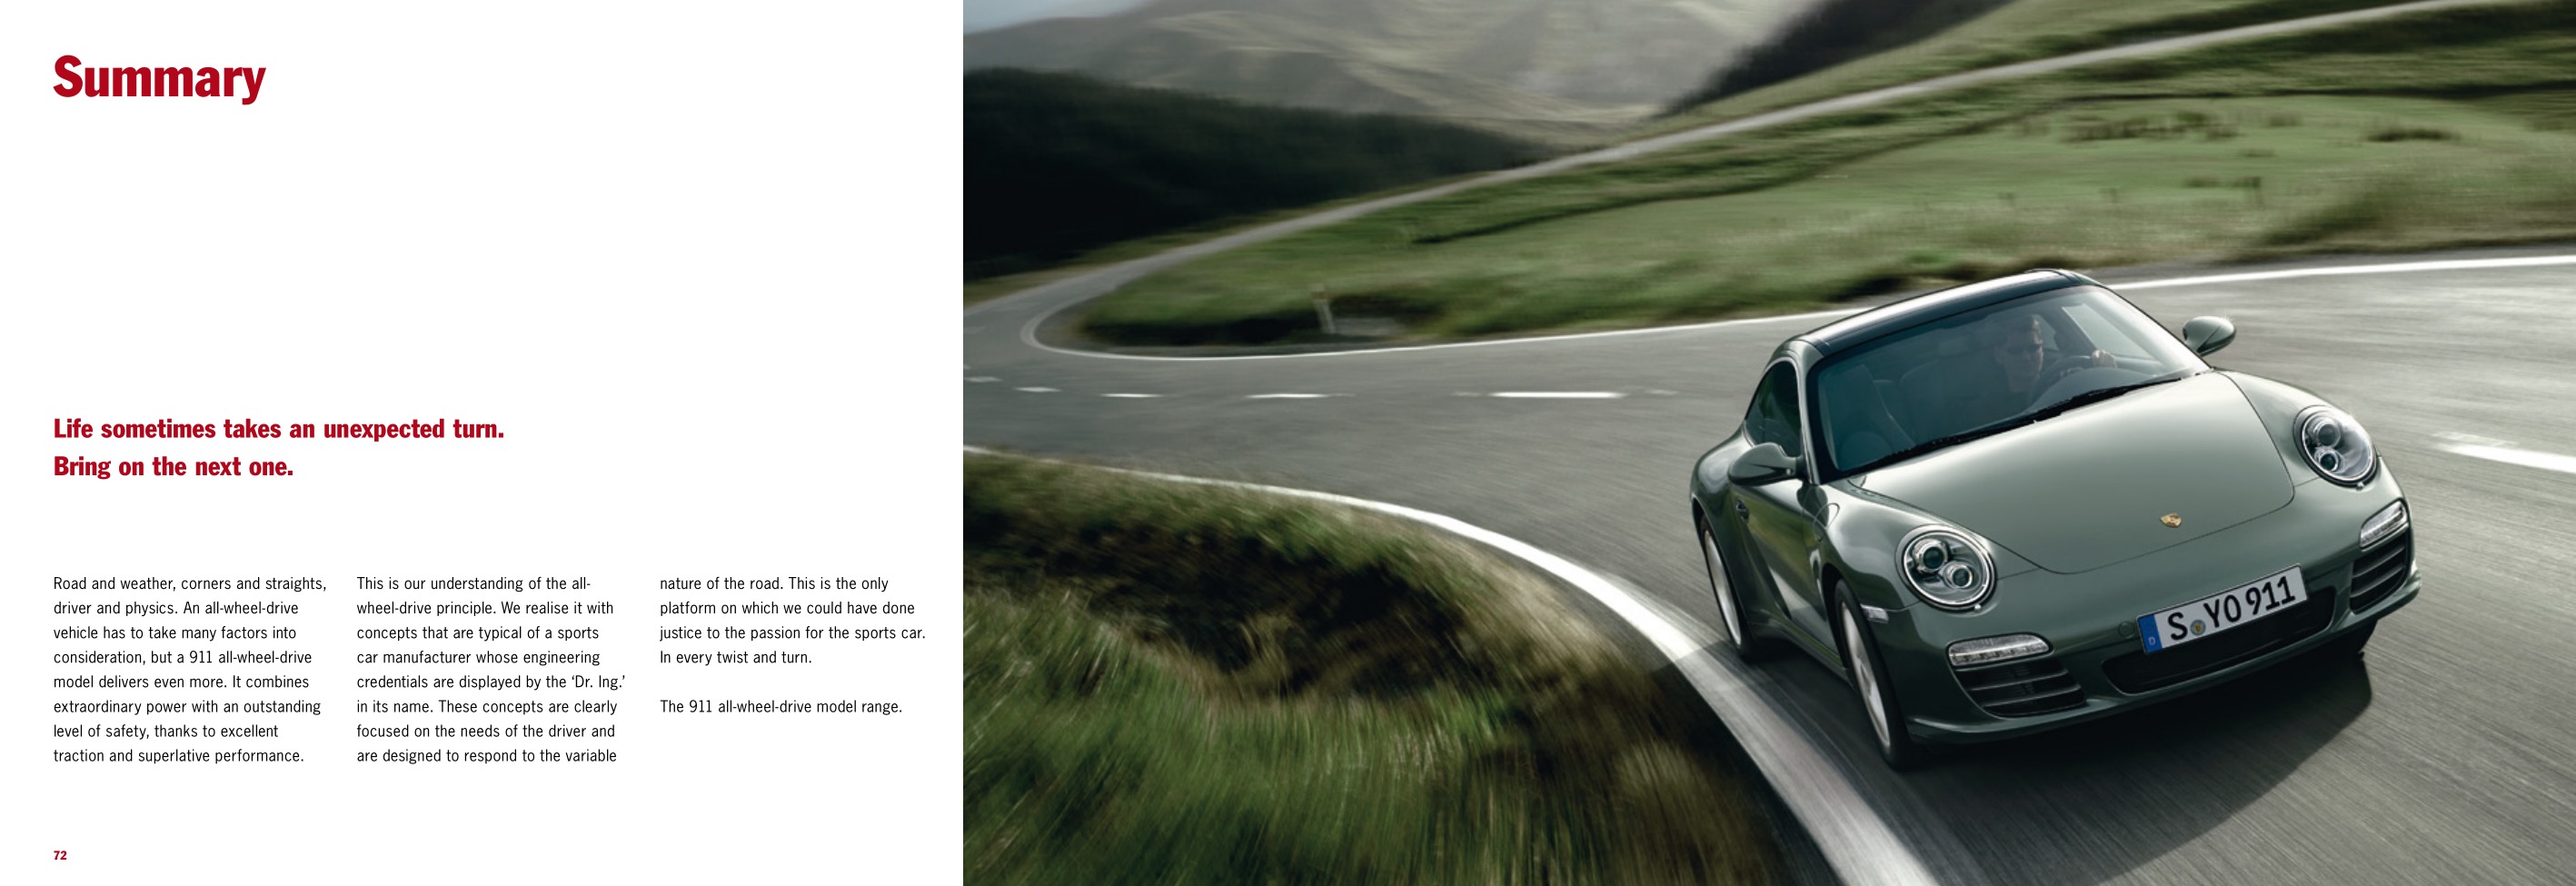 2012 Porsche 911 997 Brochure Page 18